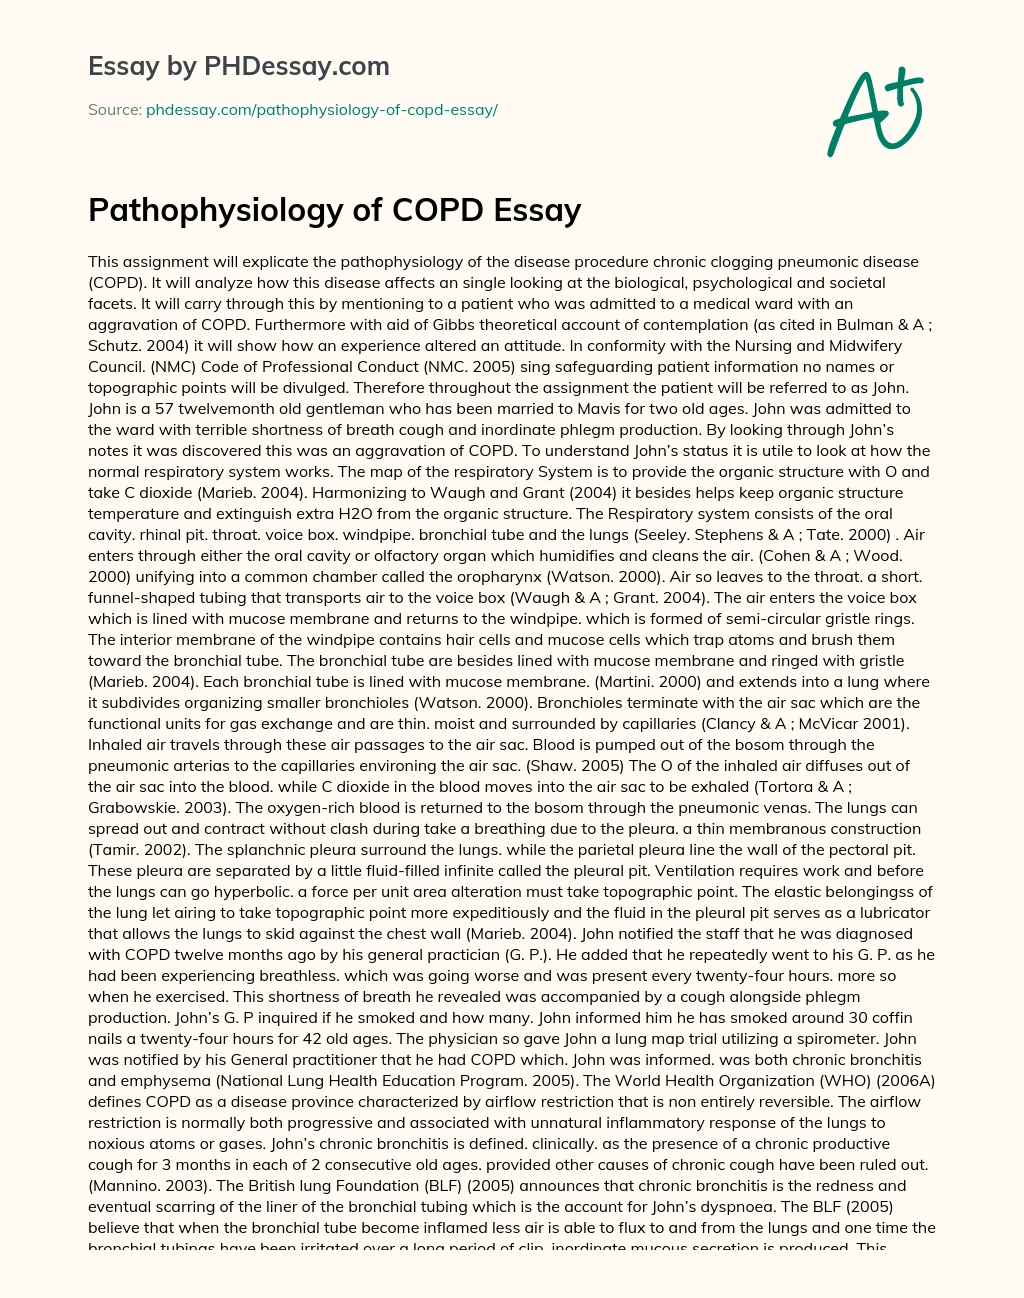 Pathophysiology of COPD Essay essay